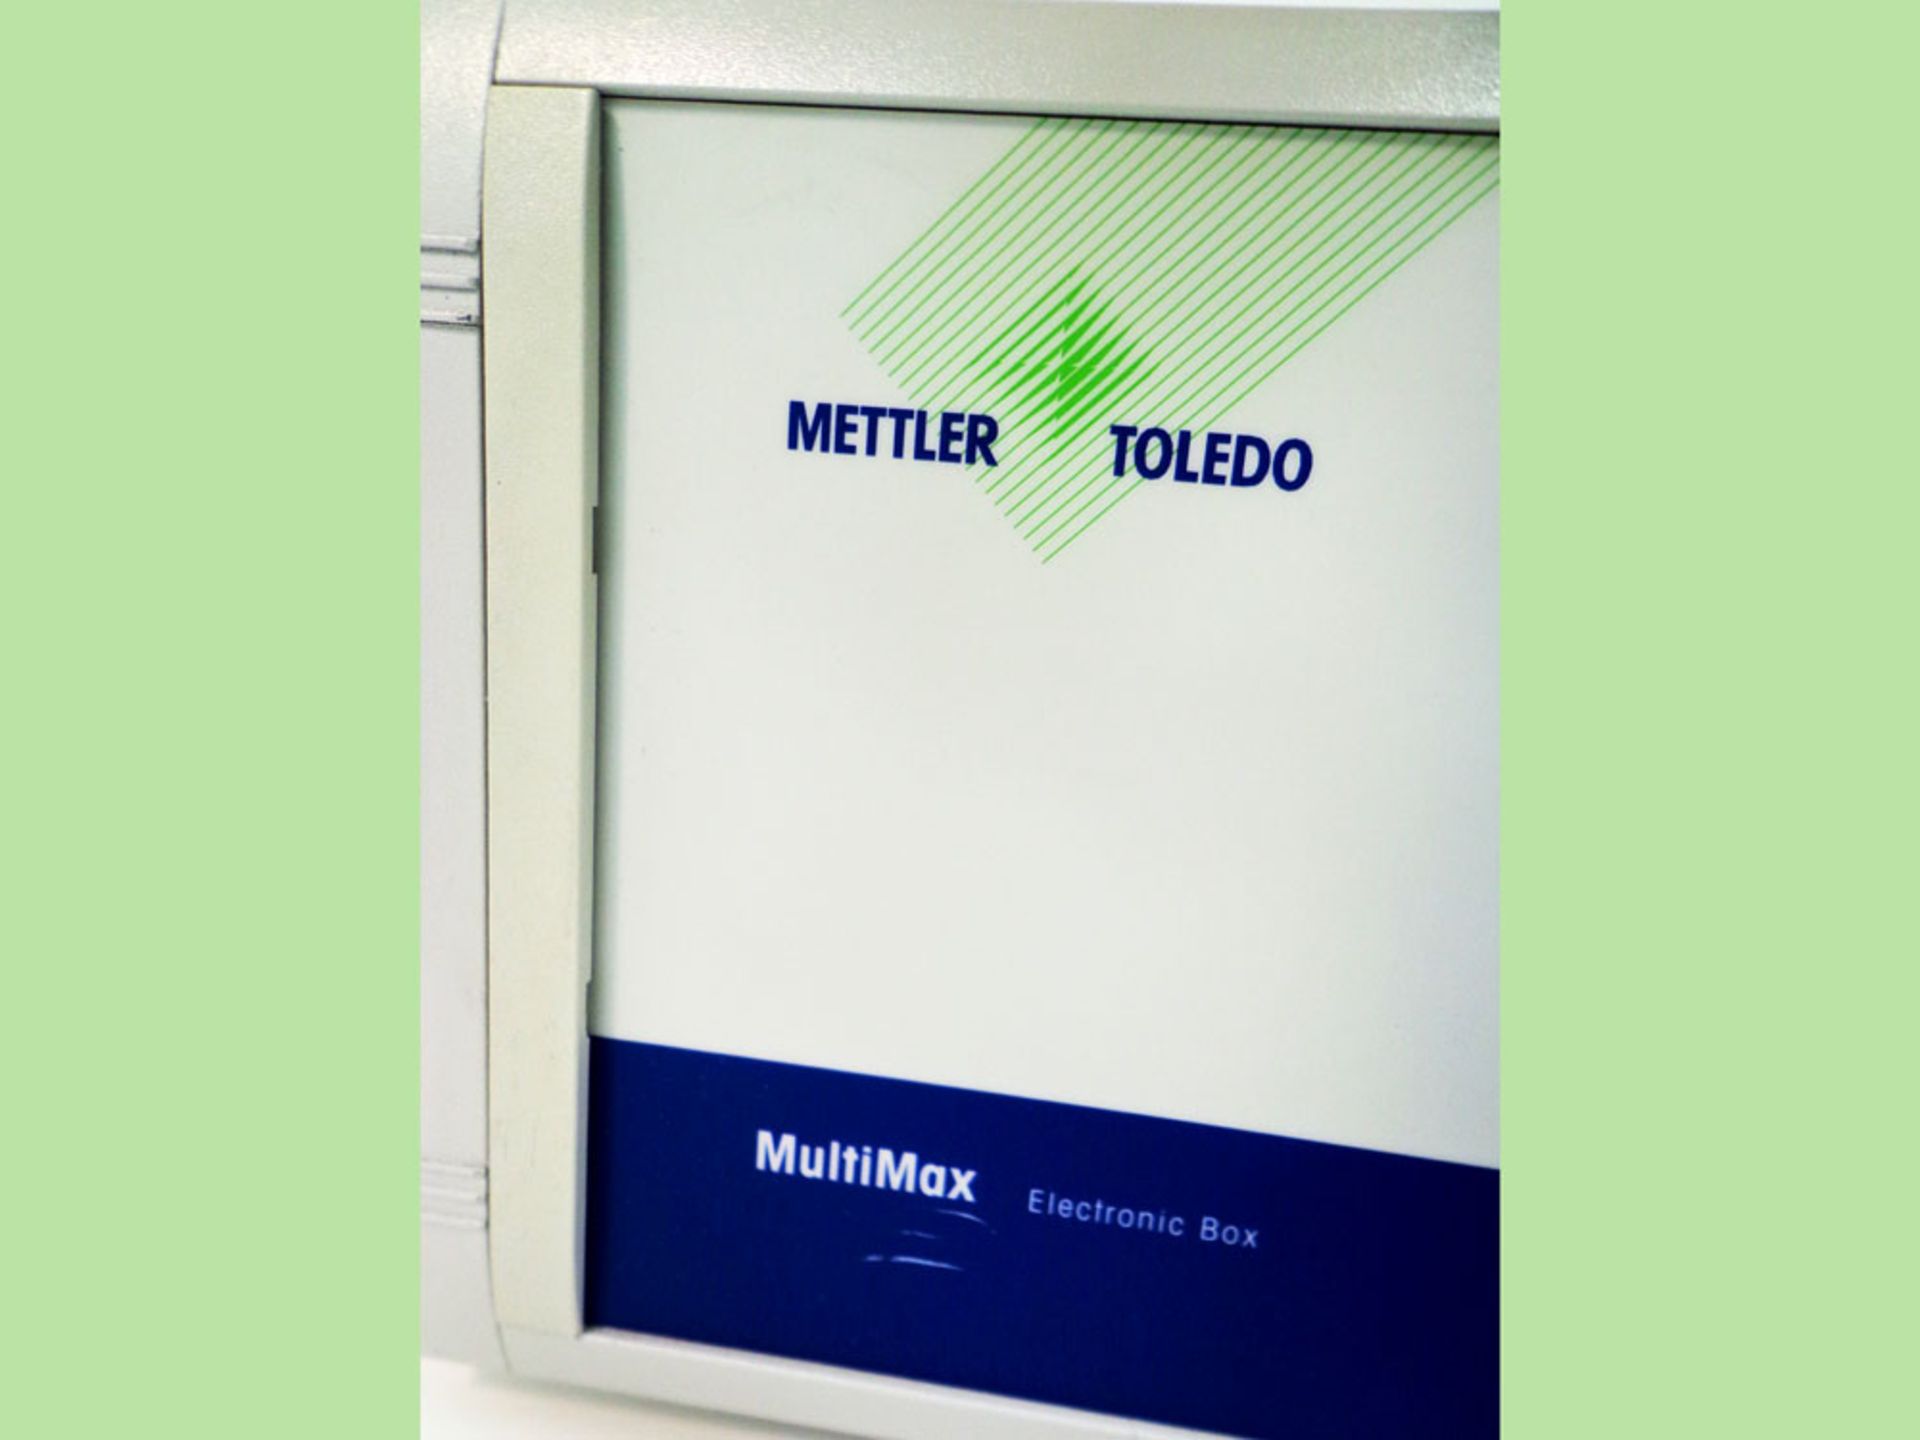 Mettler Toledo MultiMax Components, Electronic Box 51160147, 240 VAC, 70 VA, S/N 5122430181 - Image 2 of 5